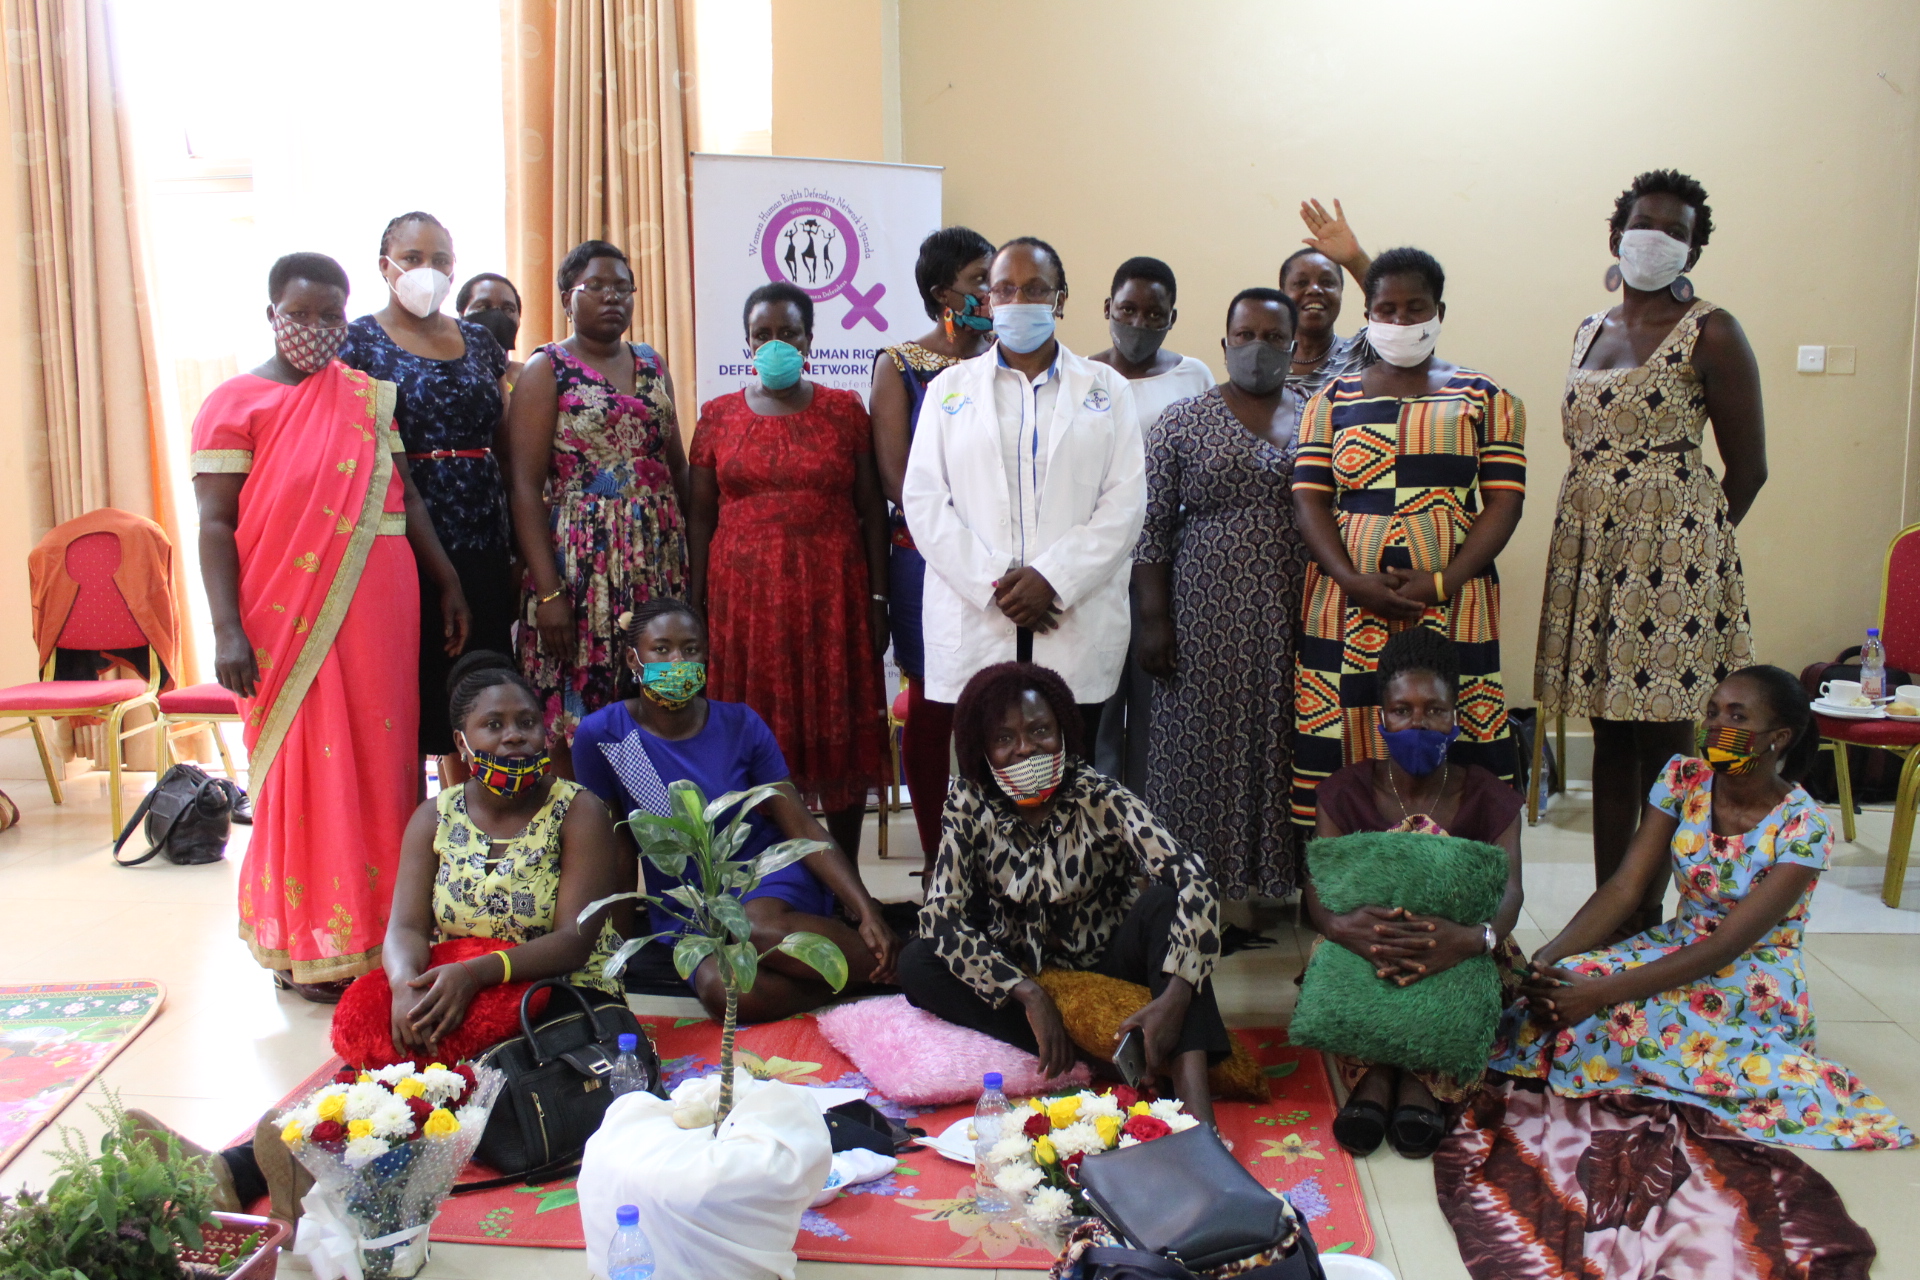 Group photo of Women HRDs with Dr Linda Birungi